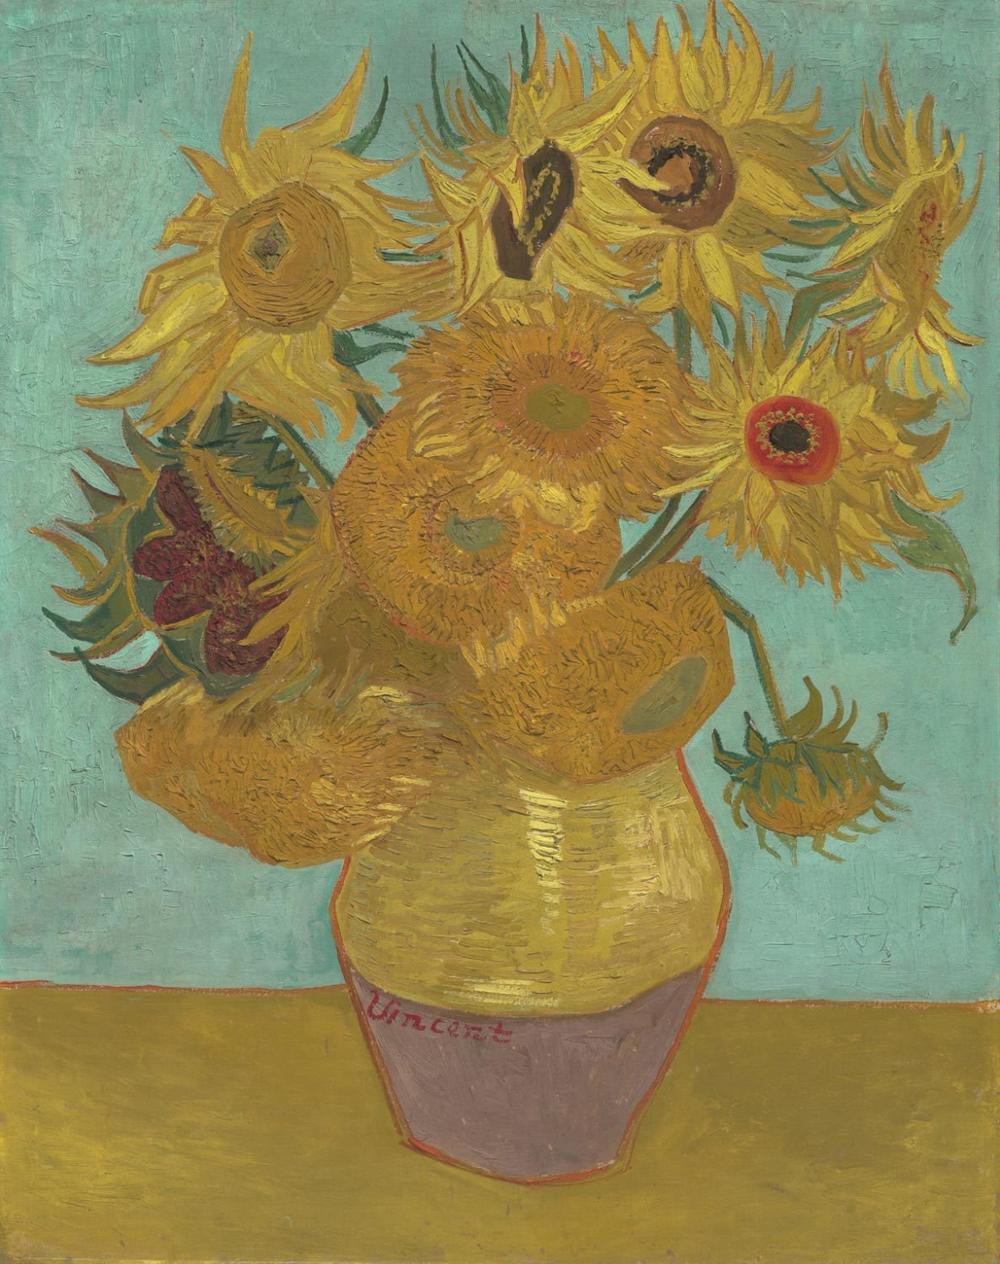 <em>Sunflowers</em>, 1889, by Vincent Willem van Gogh, oil on canvas